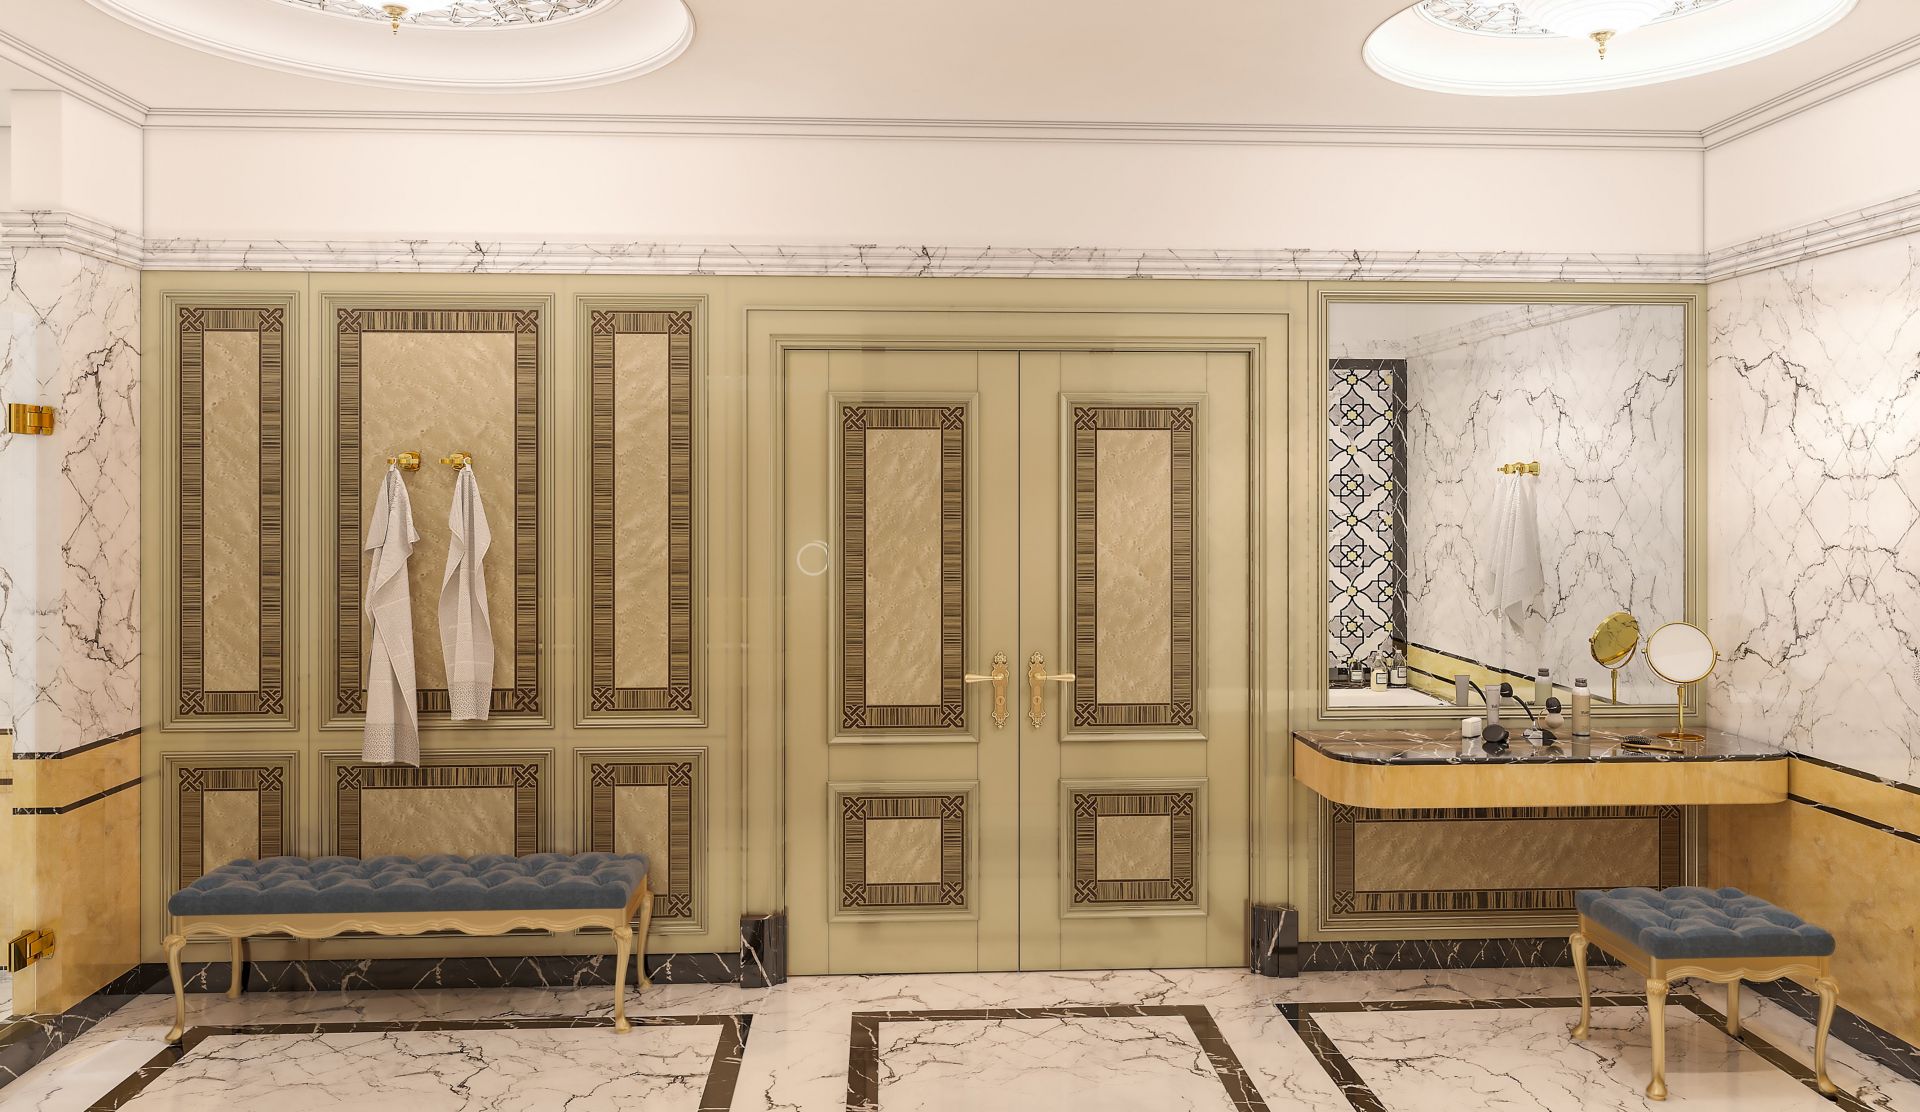 Presidential suite in Arabian style, Hilton